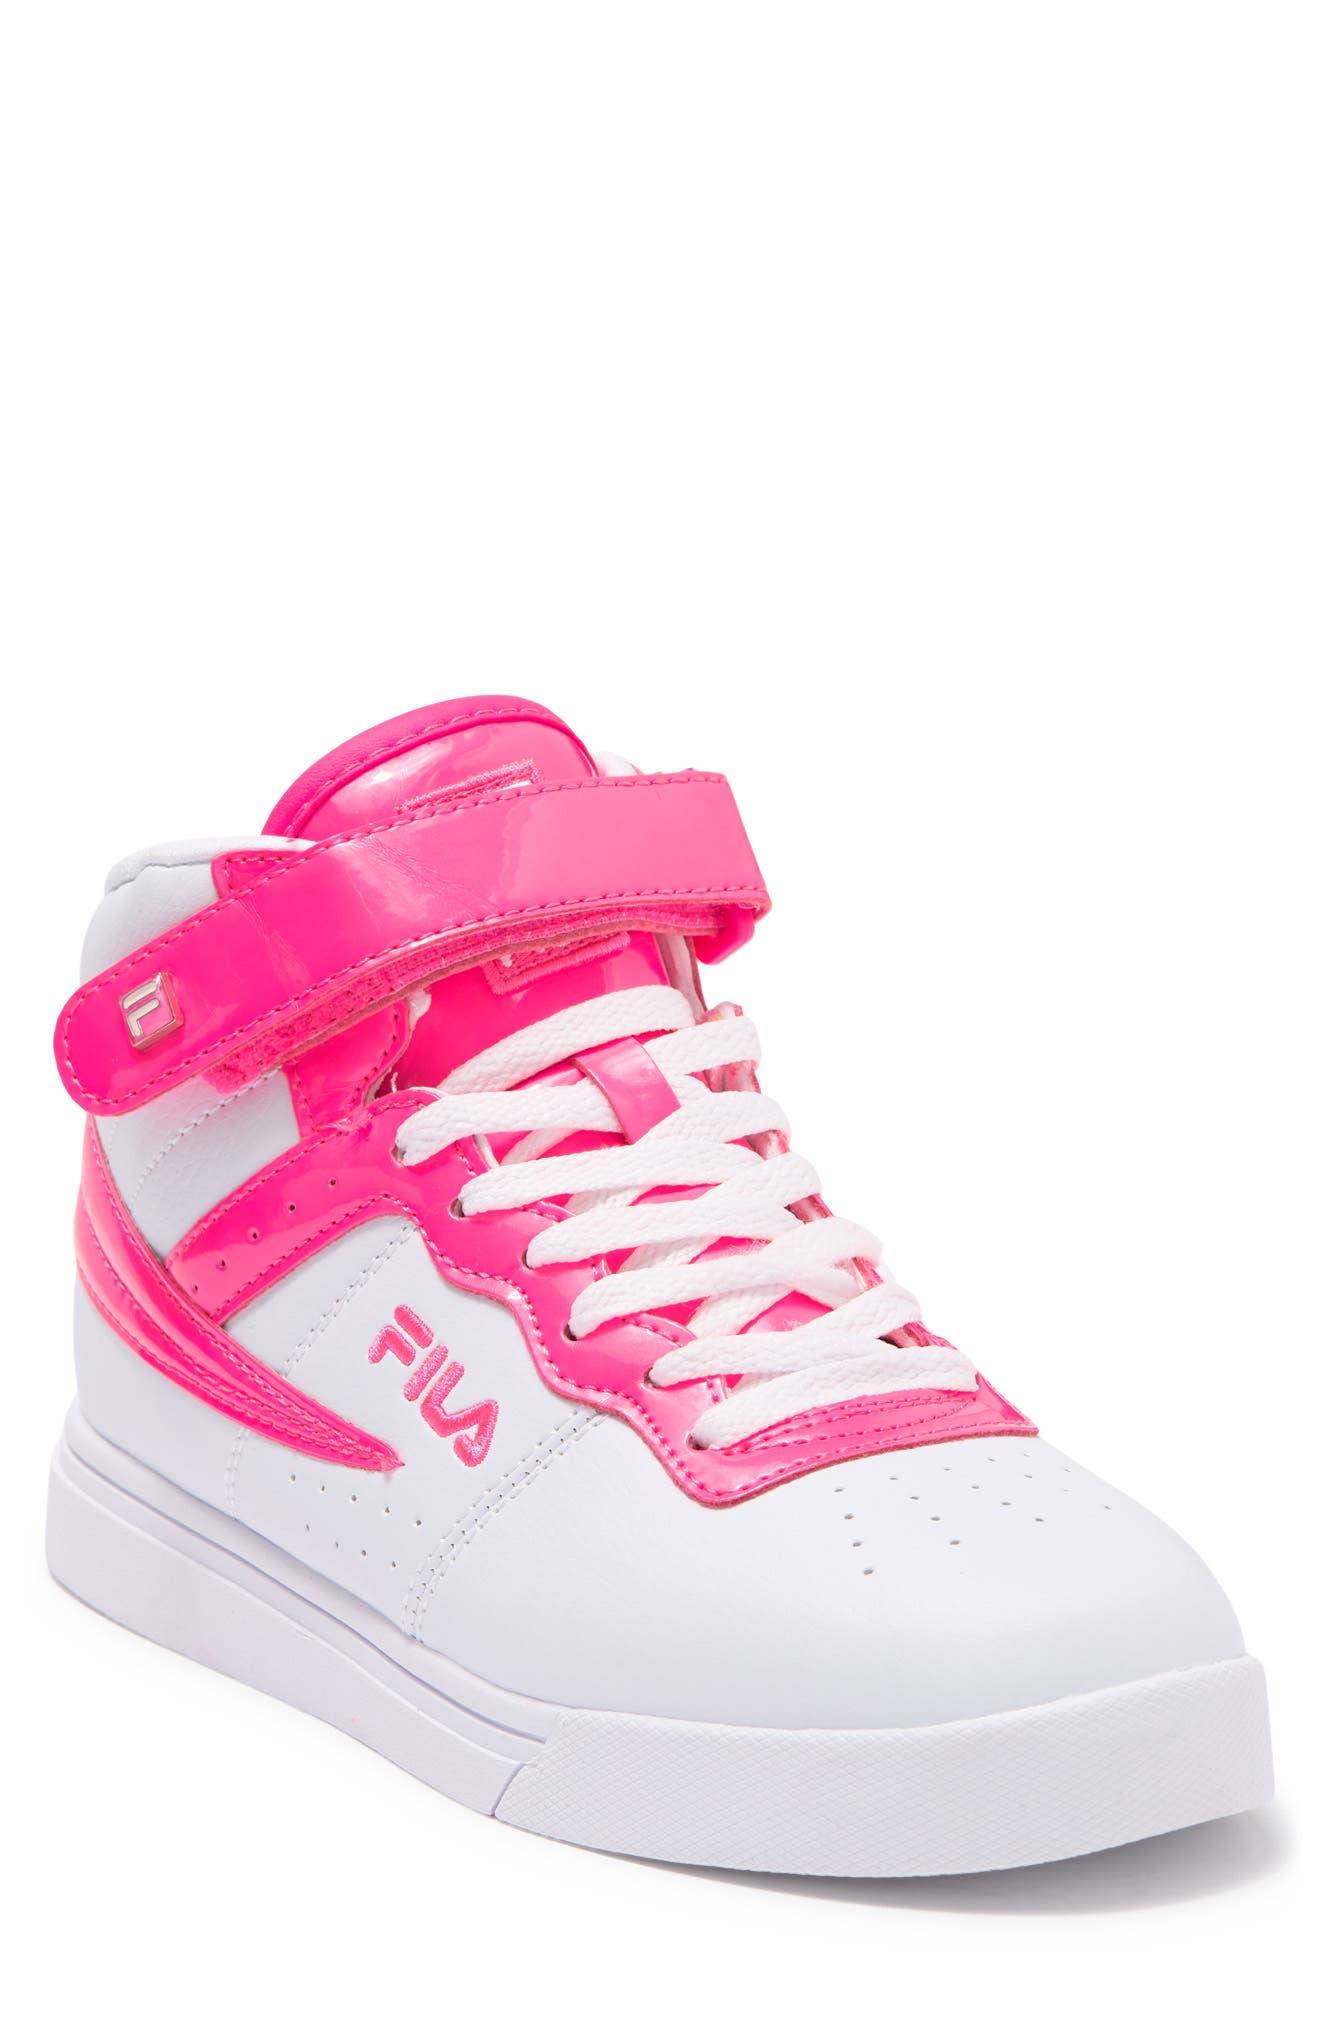 Fila Vulc 13 Anodized High Top Sneaker In Wht/kopk/kopk At Nordstrom Rack  in Pink | Lyst